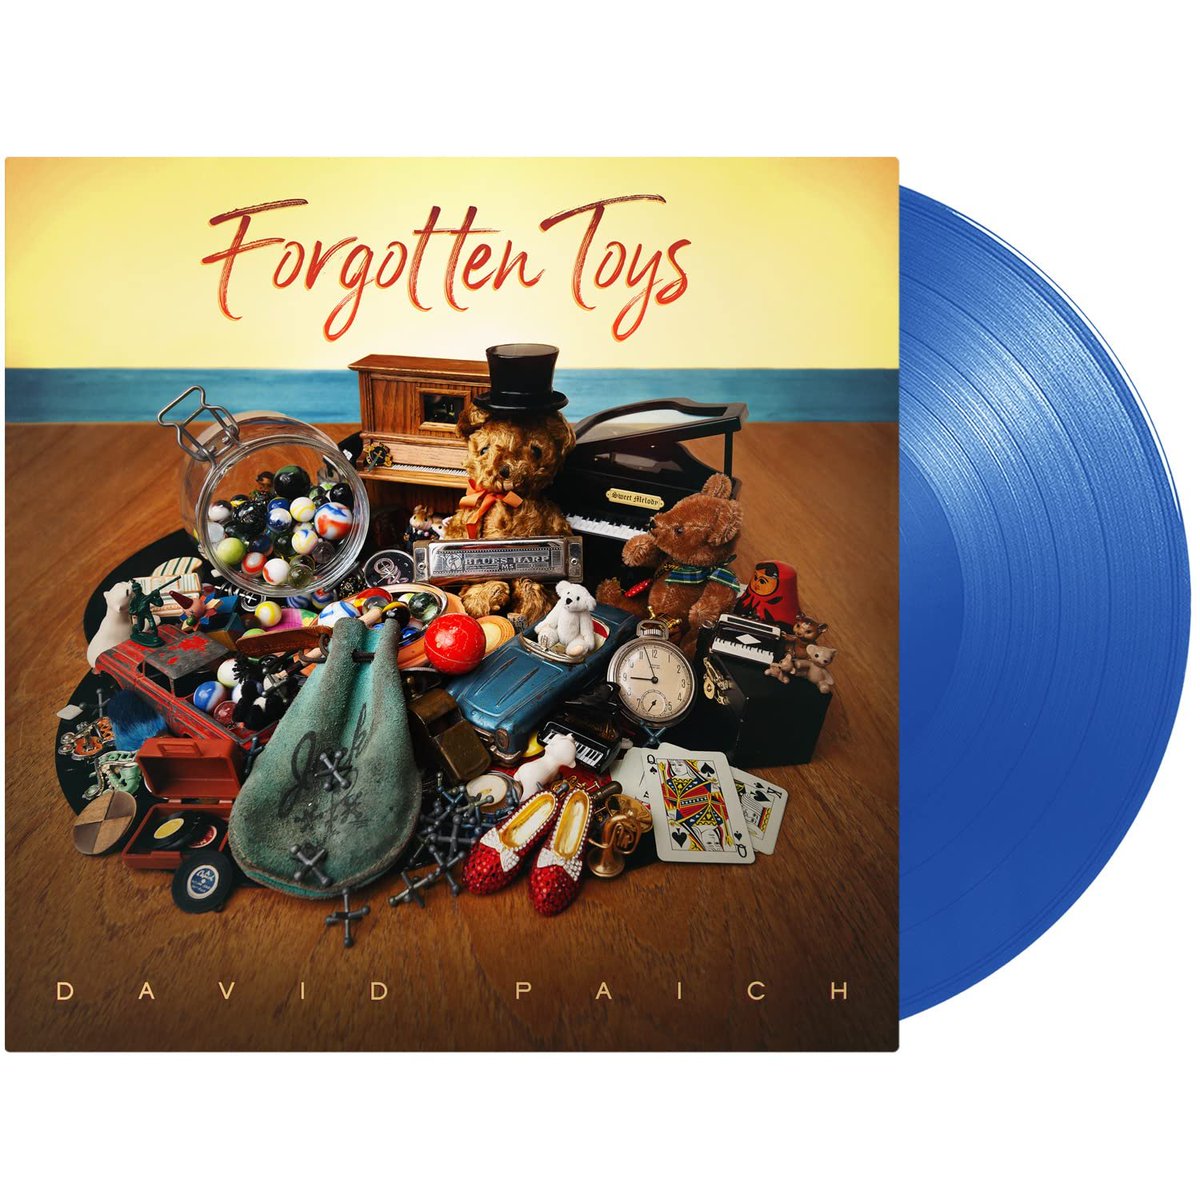 David Paich - Forgotten Toys (Transparent Blue Color) $7.80
amzn.to/4dy831b

#vinyl #vinyladdict